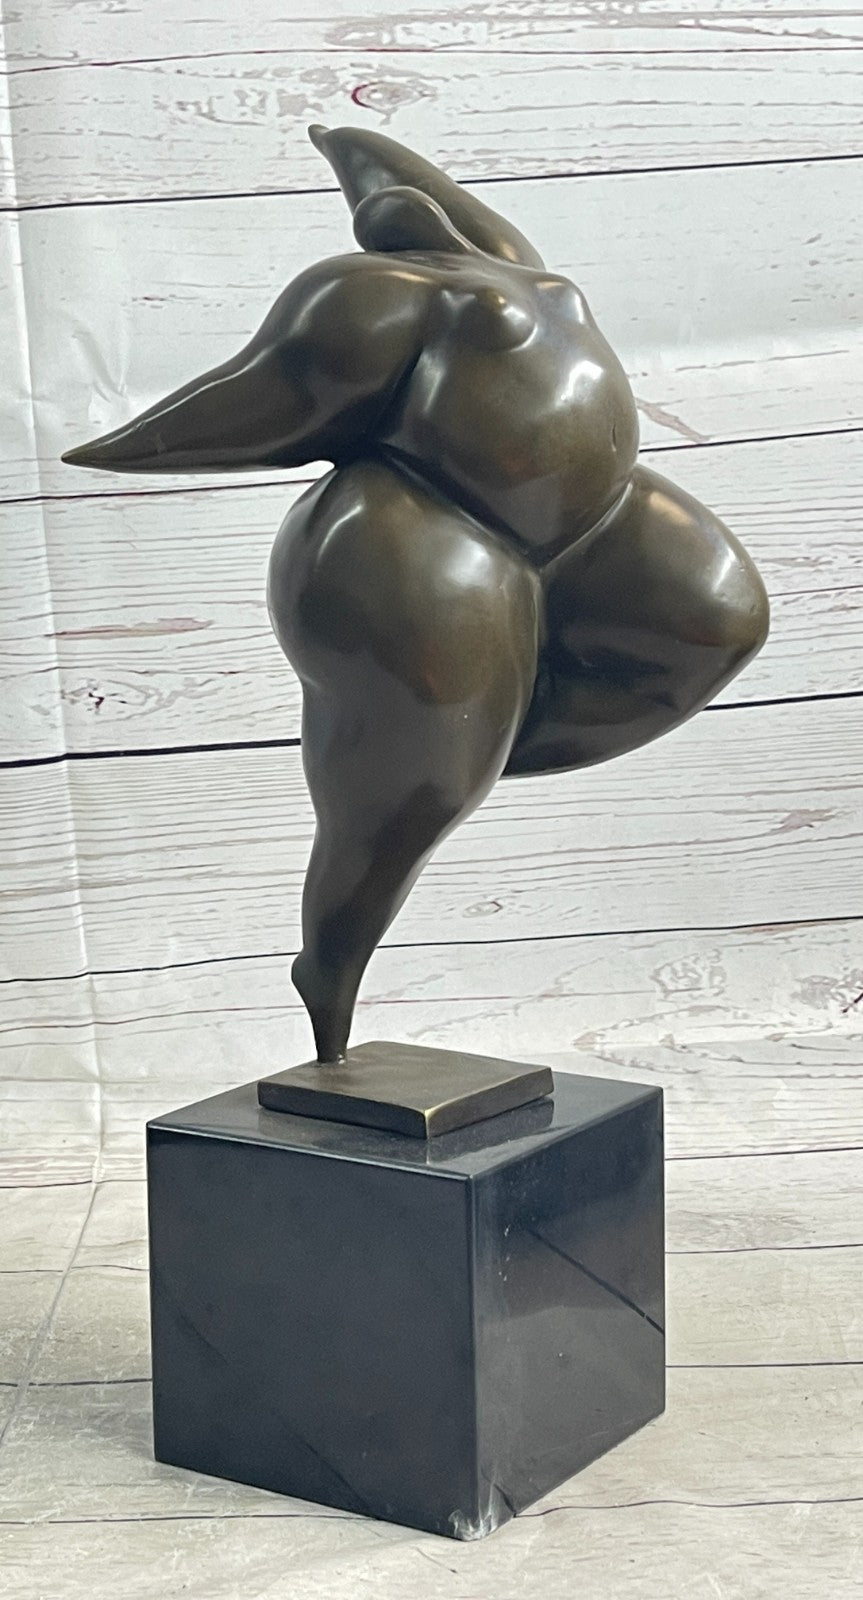 Handcrafted bronze sculpture SALE Cast Art Modern Abstract Home Decor Gift